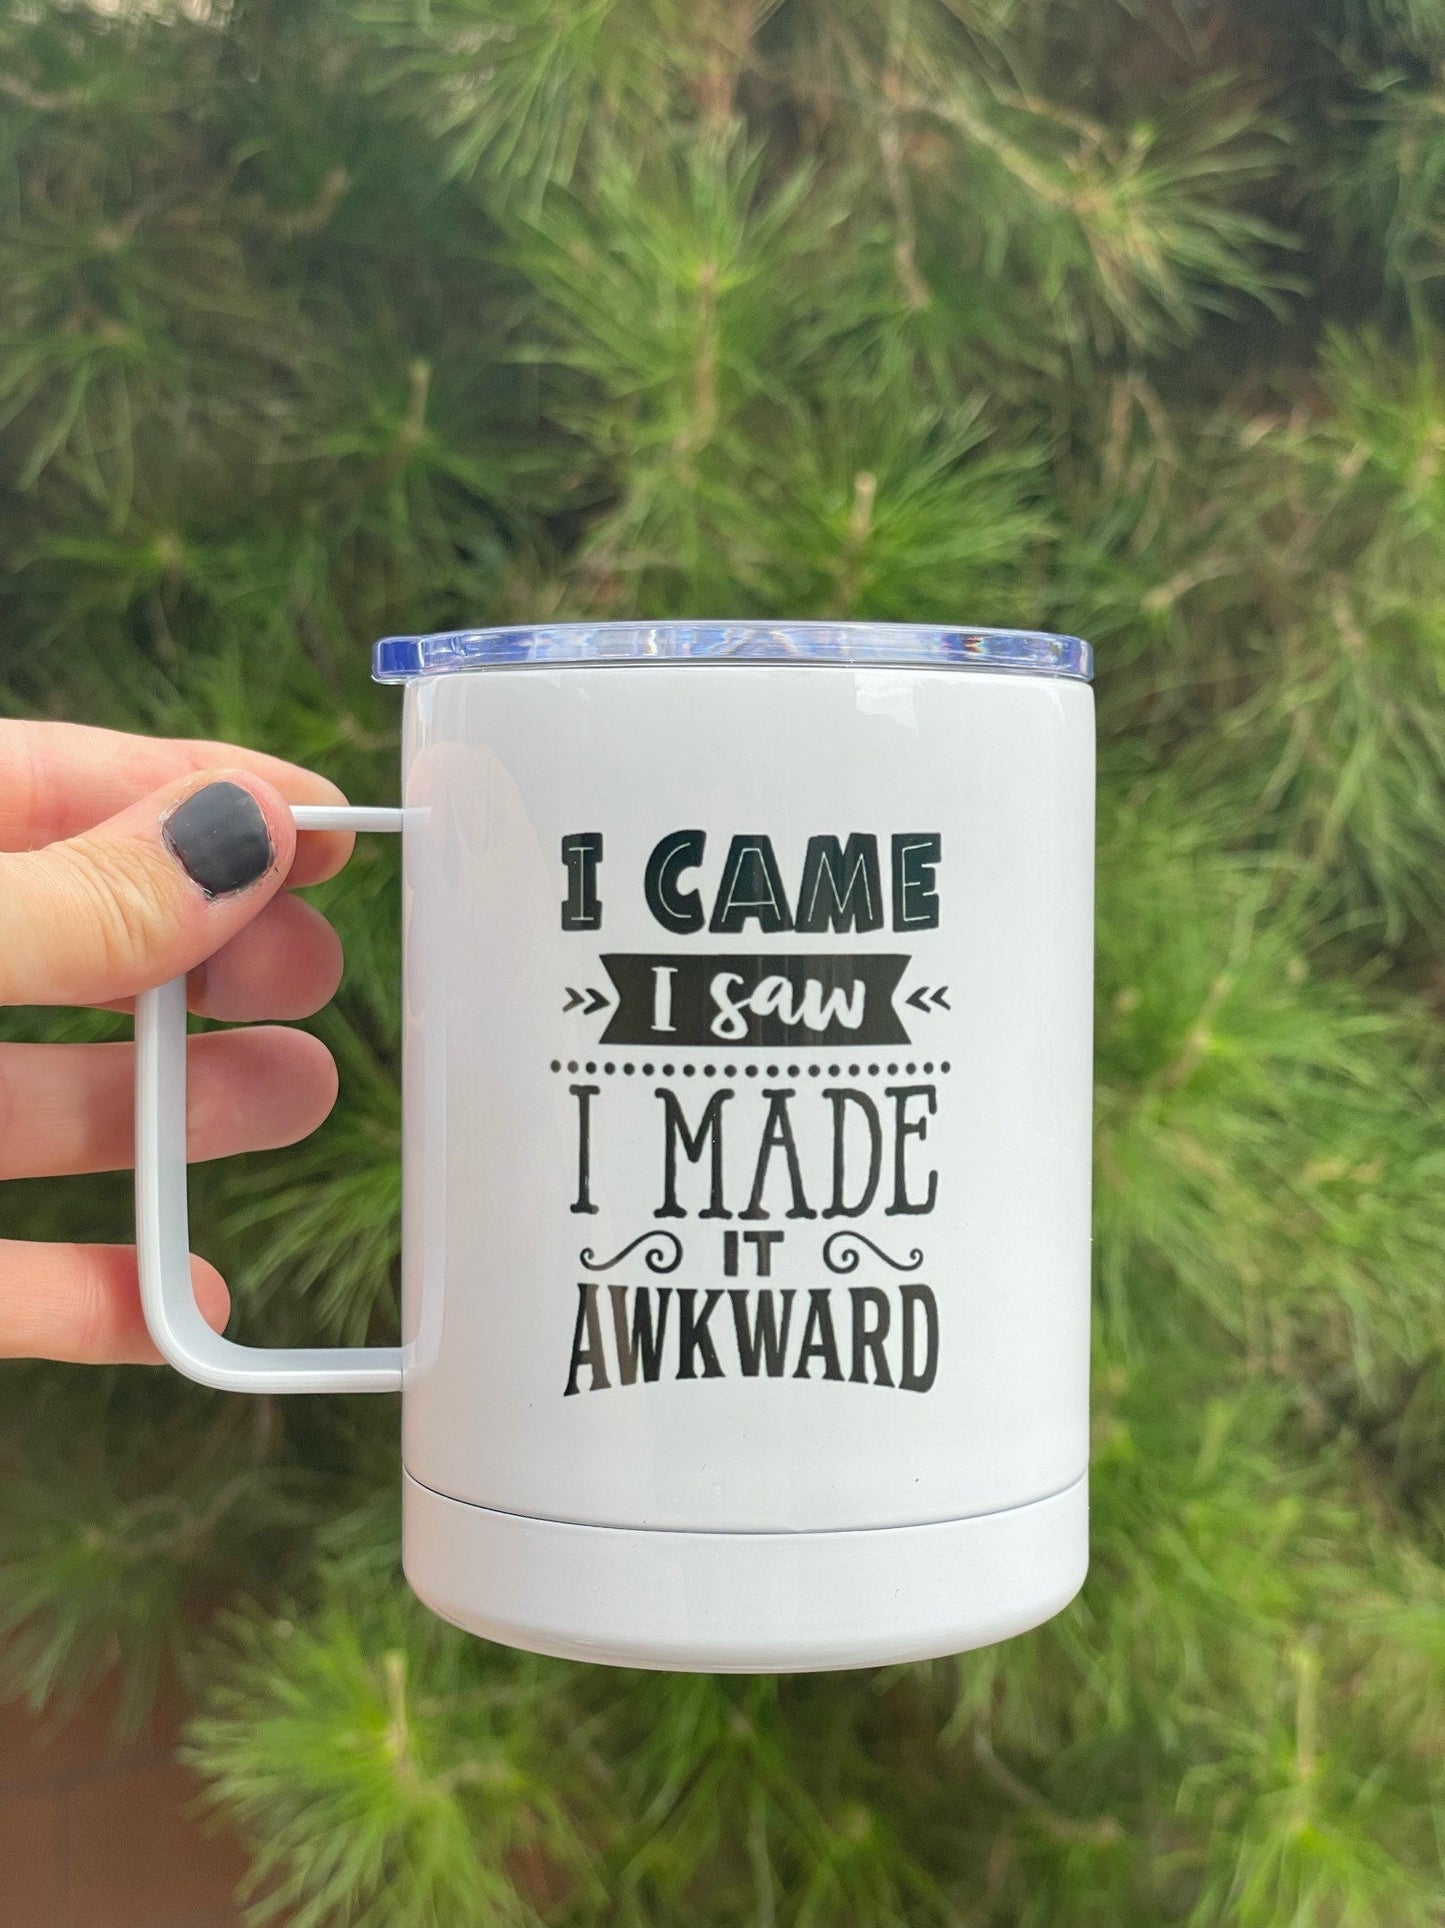 I came I saw I made it awkward, 10oz Camp Style Insulated Mug with Handle & Leak Proof Lid